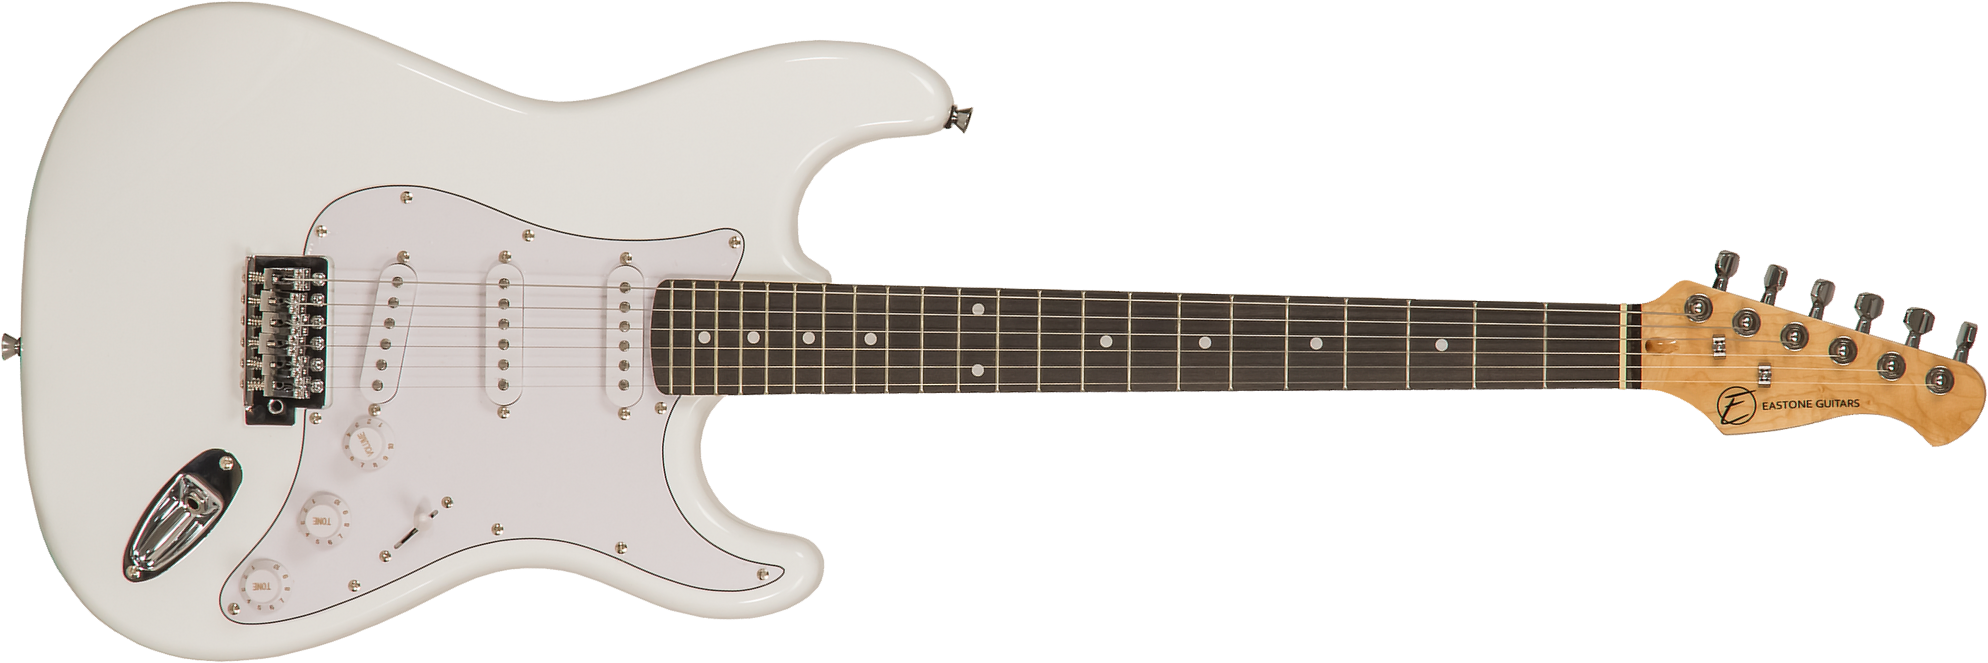 Eastone Str70 3s Trem Pur - Olympic White - Elektrische gitaar in Str-vorm - Main picture